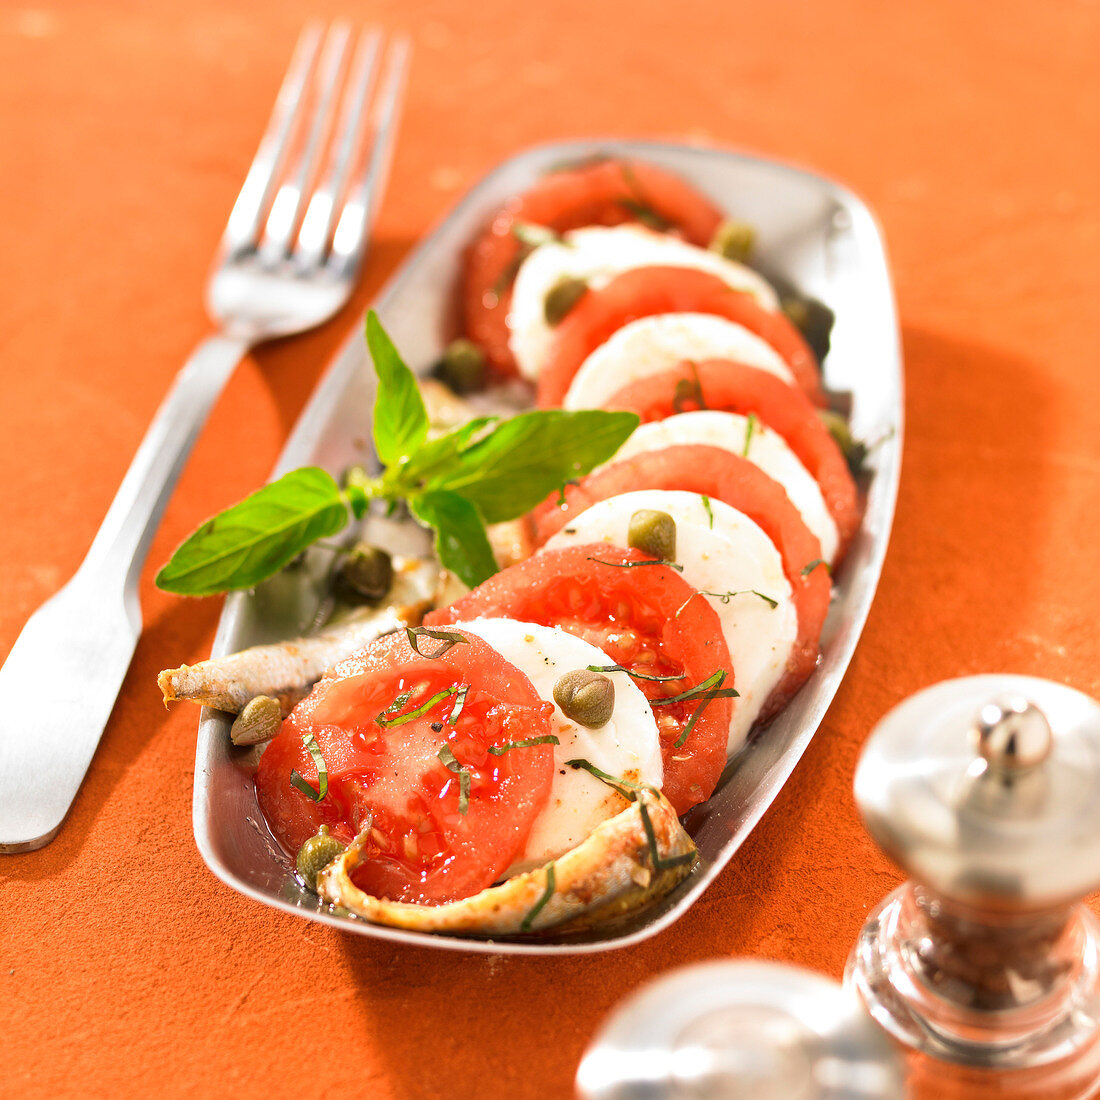 Tomato-mozzarella salad with capers and anchovies